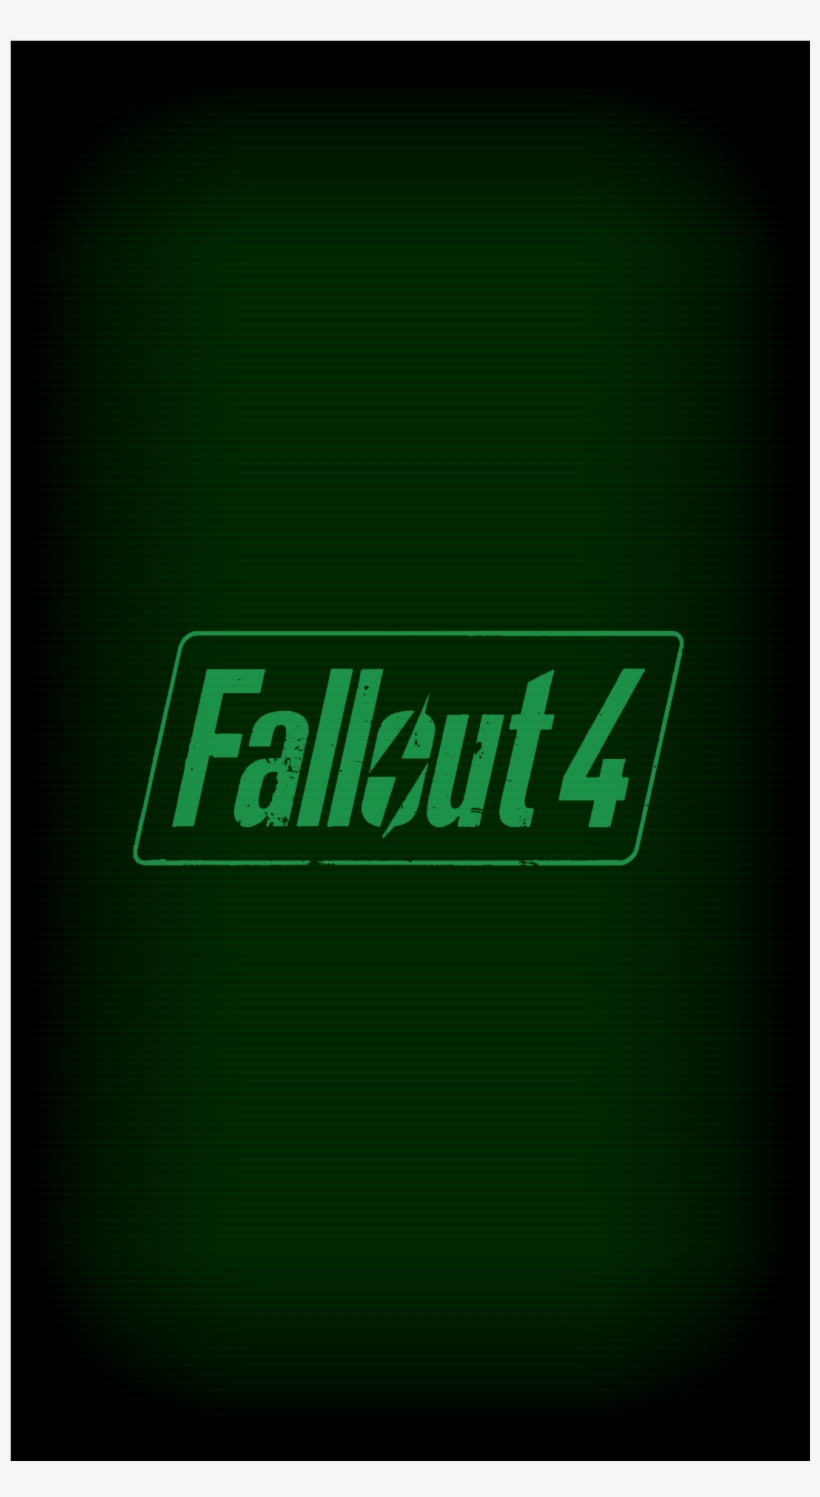 Fallout 4 Logo Mobile Wallpaper - Fallout 4, transparent png #414748